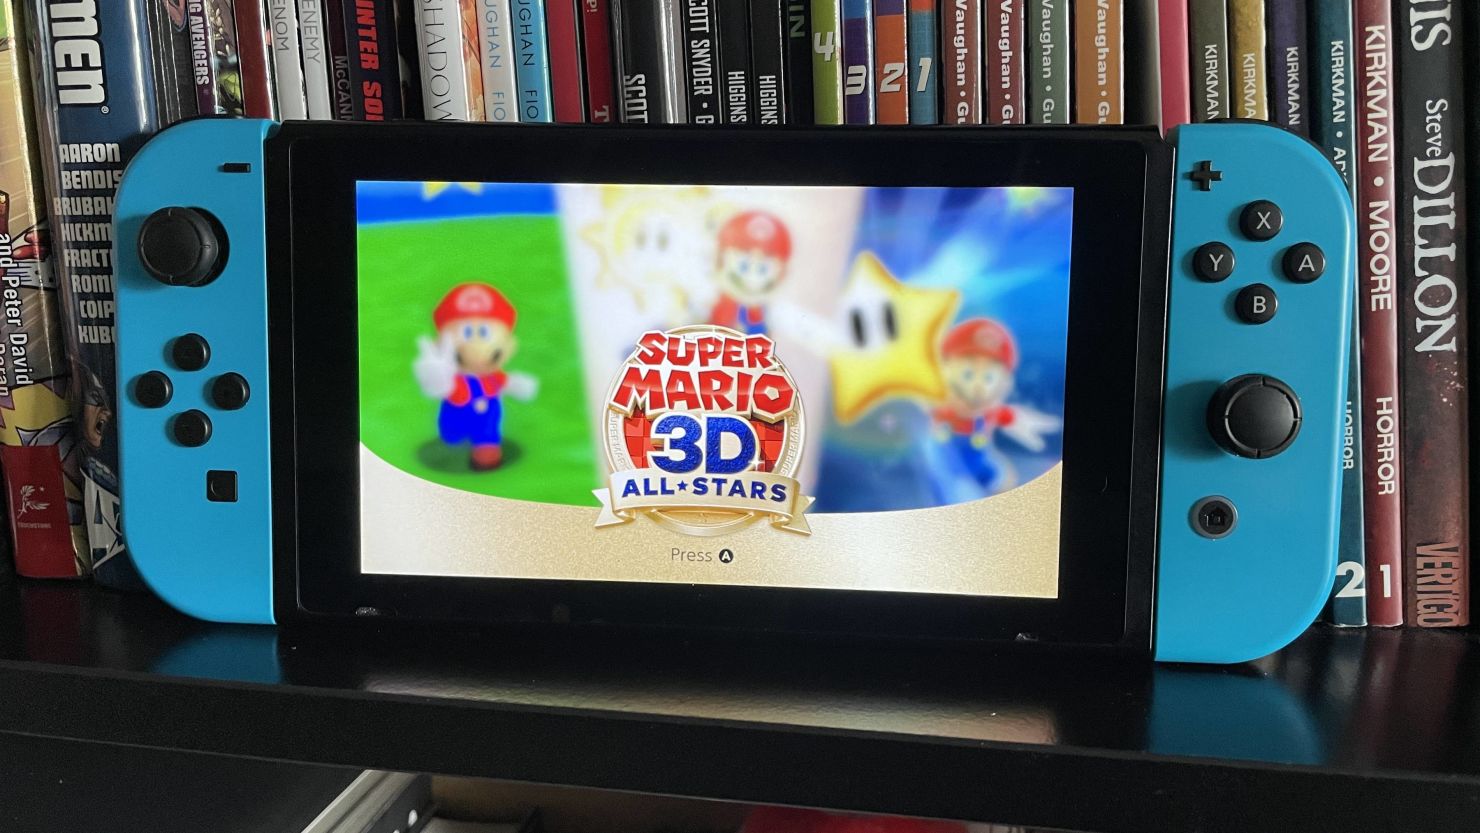 Nintendo Switch Bundle with Mario Kart 8 Deluxe